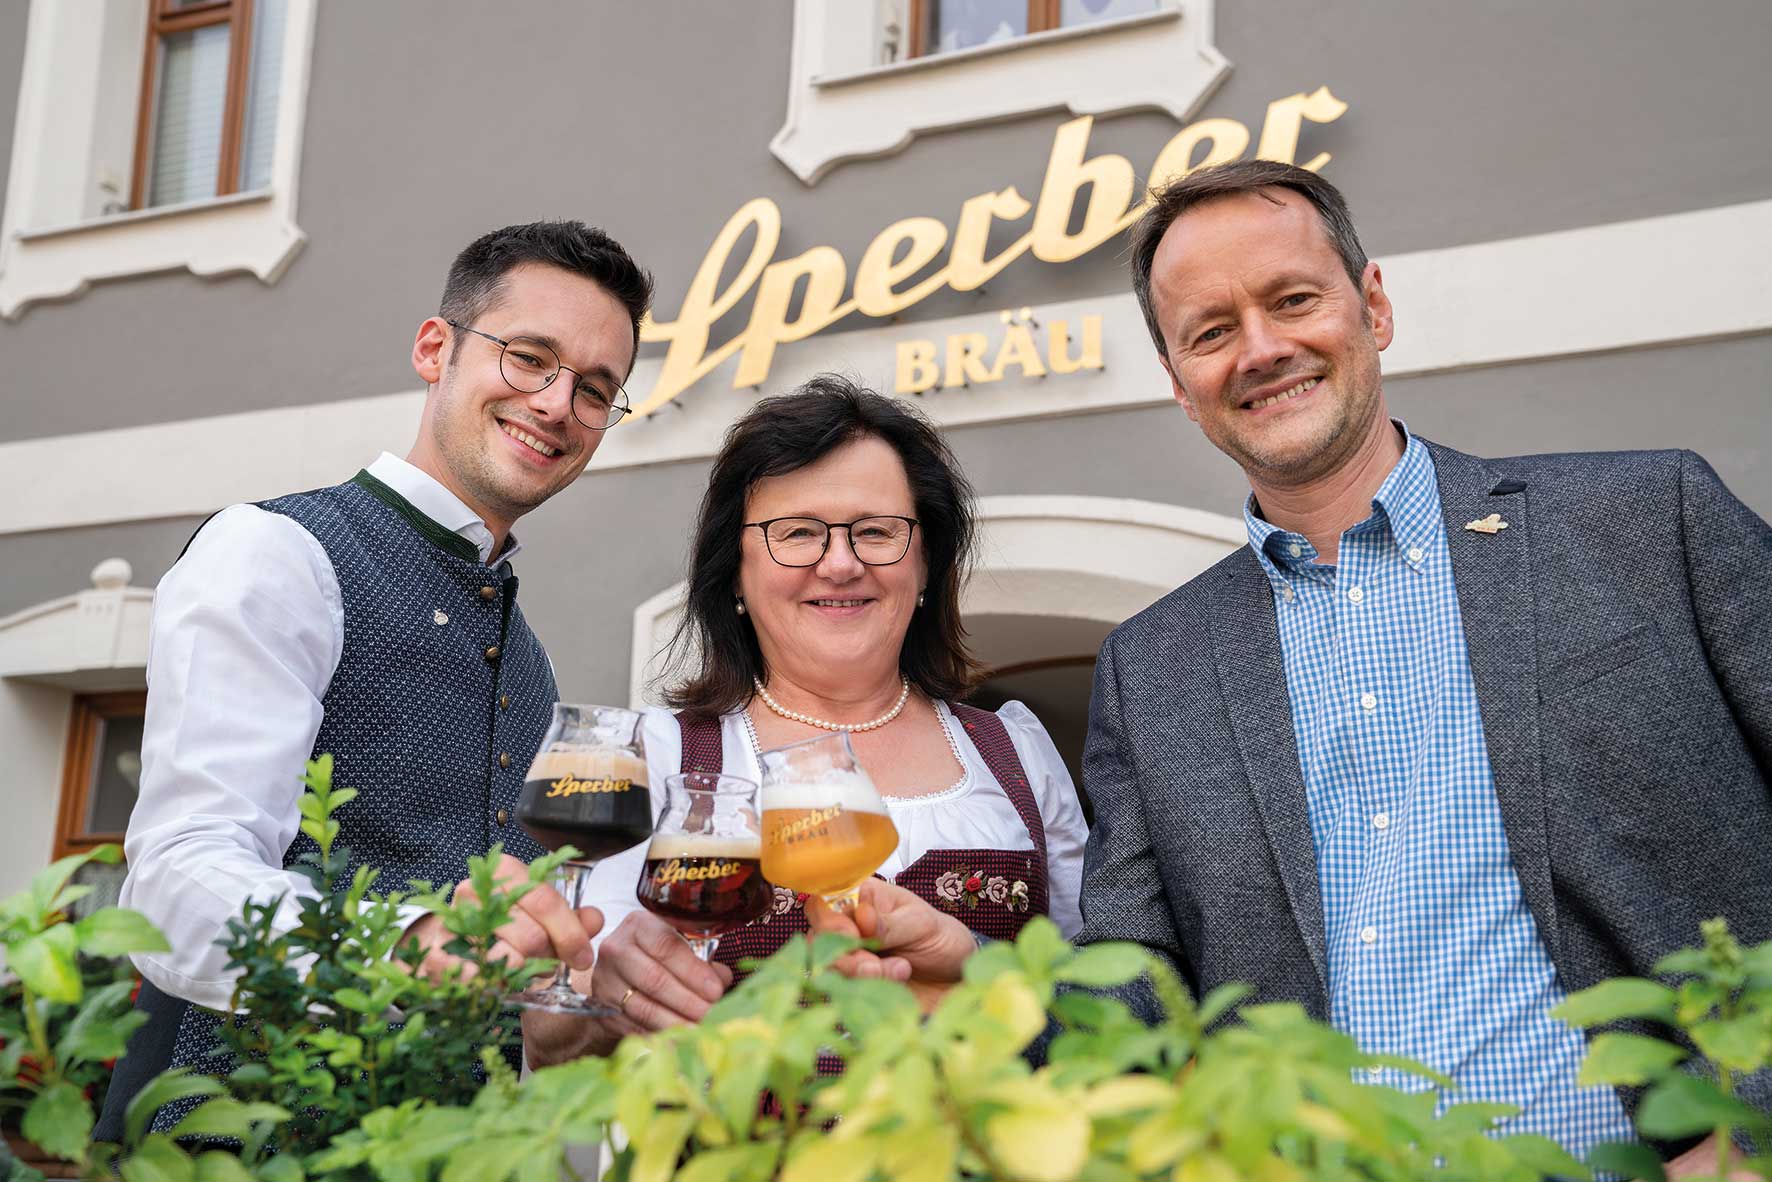 Familie Sperber vom Flair Hotel Brauereigasthof Sperber Bräu